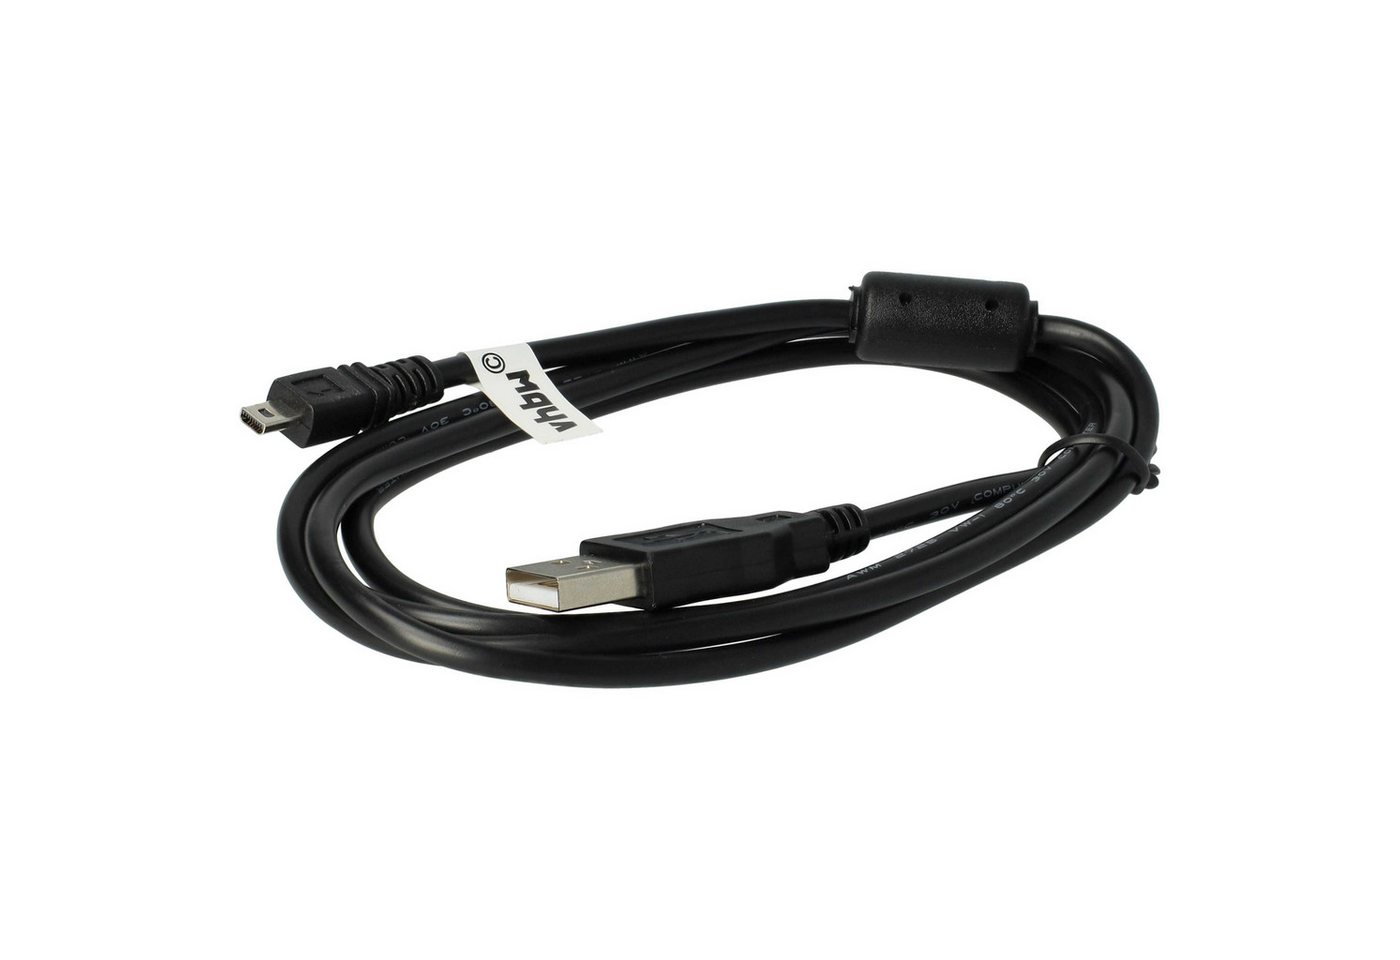 vhbw passend für Panasonic Lumix DMC-FS41, DMC-FS42, DMC-FS41 USB-Kabel von vhbw